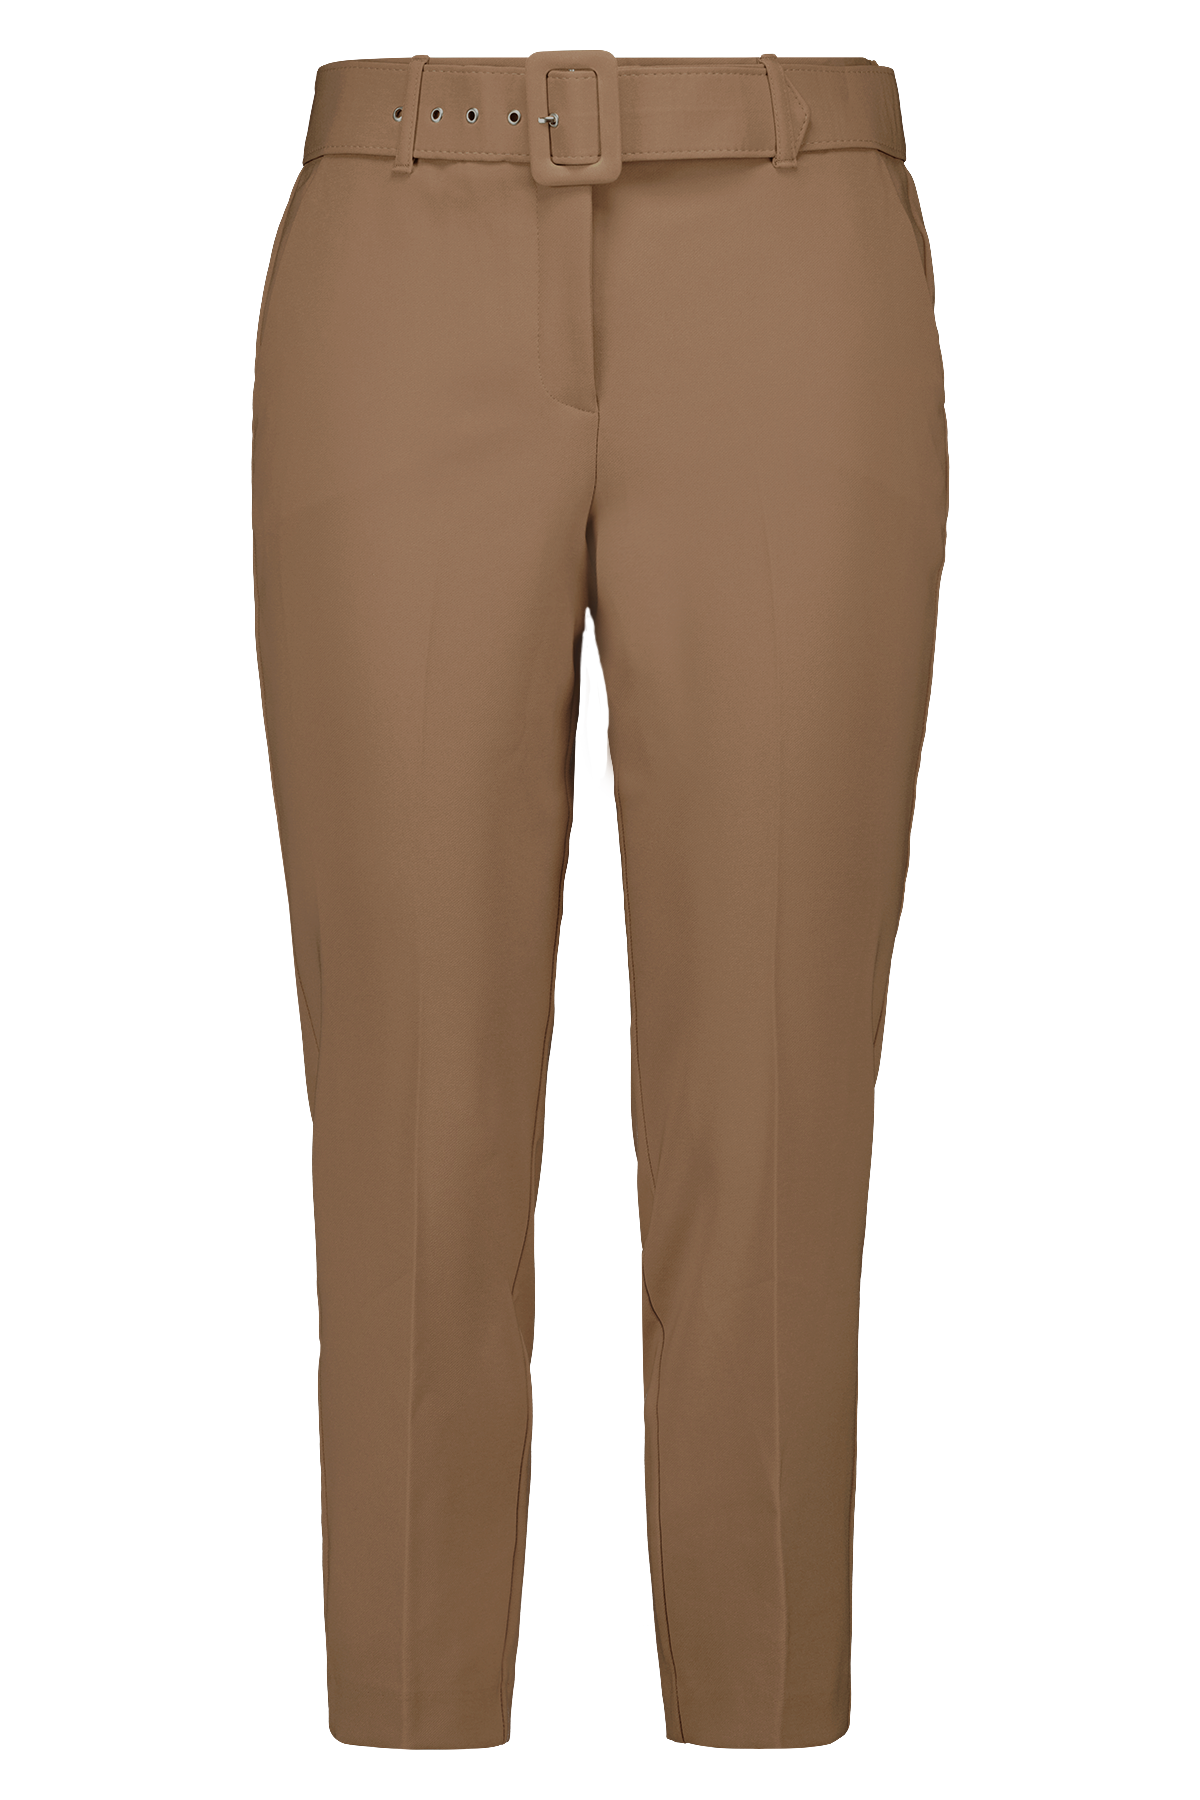 Pantalon met riem image 1